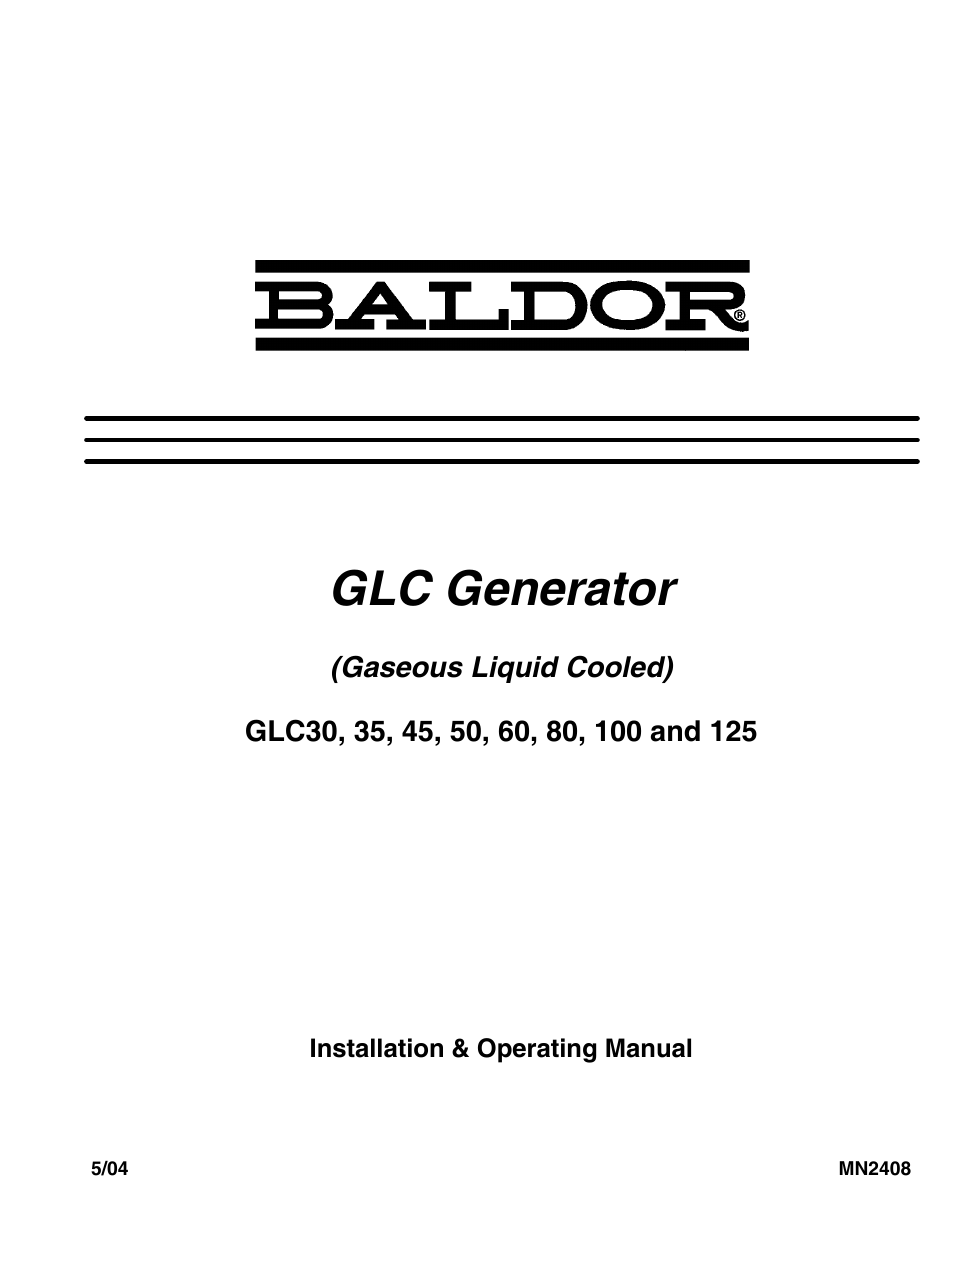 GLC GENERATOR GLC80